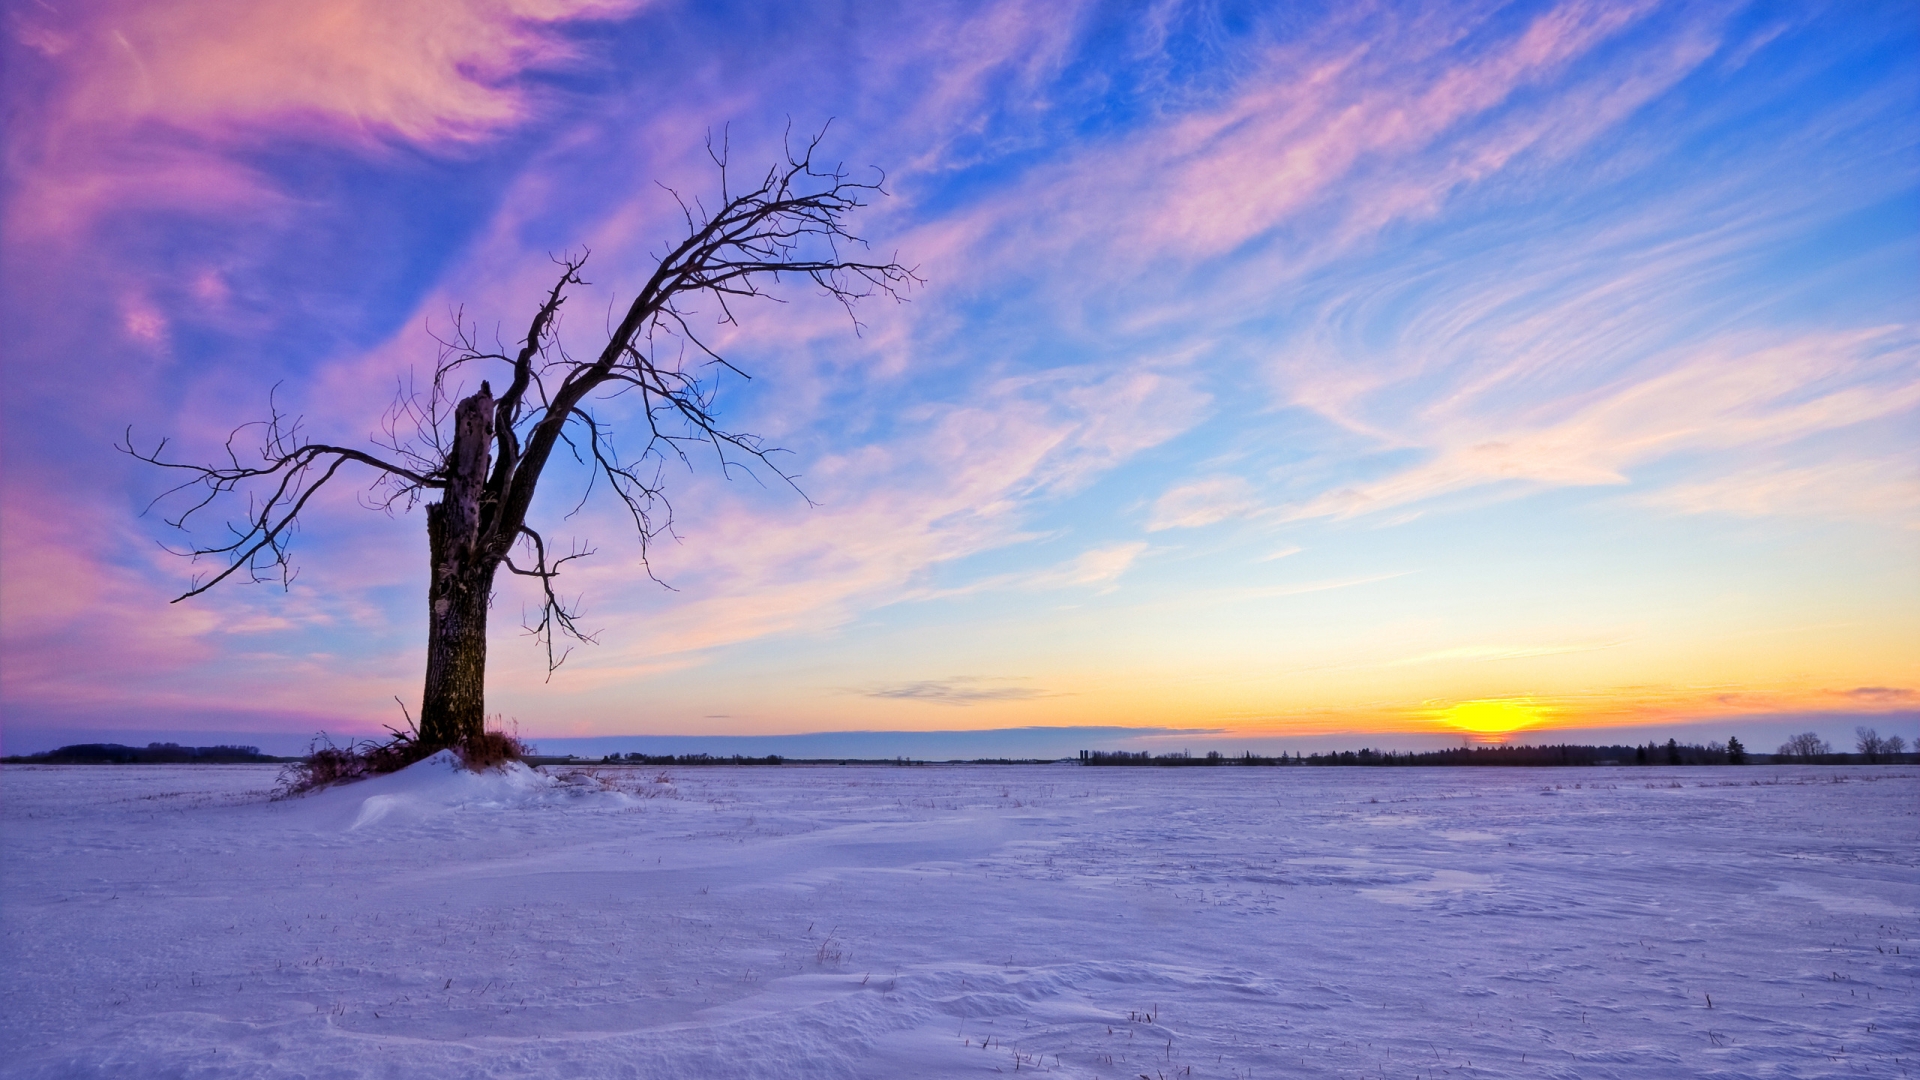 Beautiful Winter Sunset for 1920 x 1080 HDTV 1080p resolution